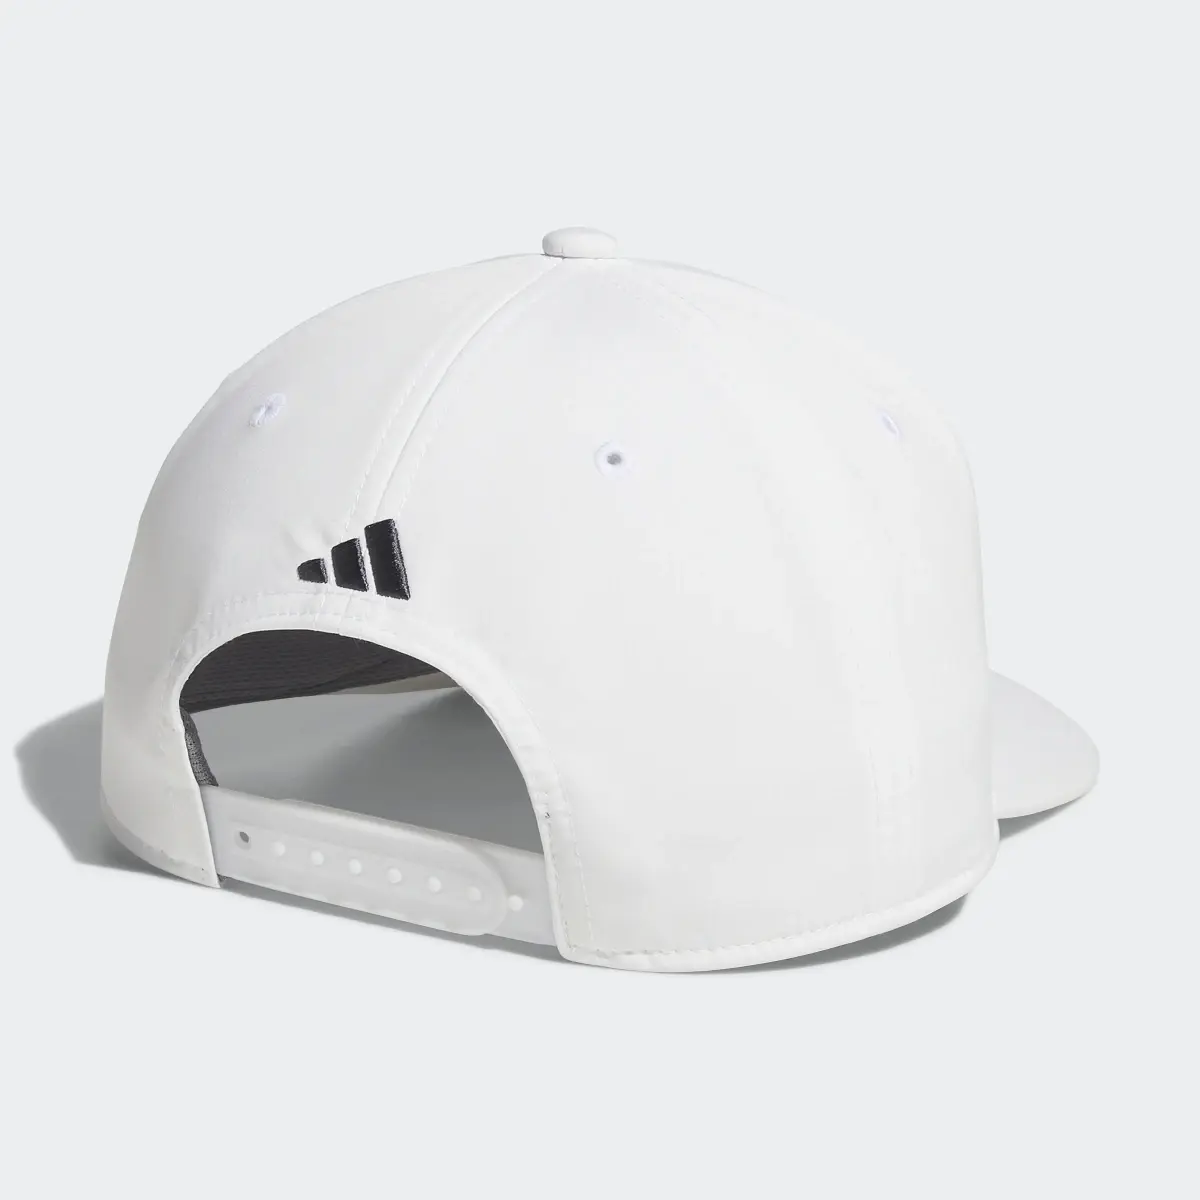 Adidas Logo Snapback Hat. 3